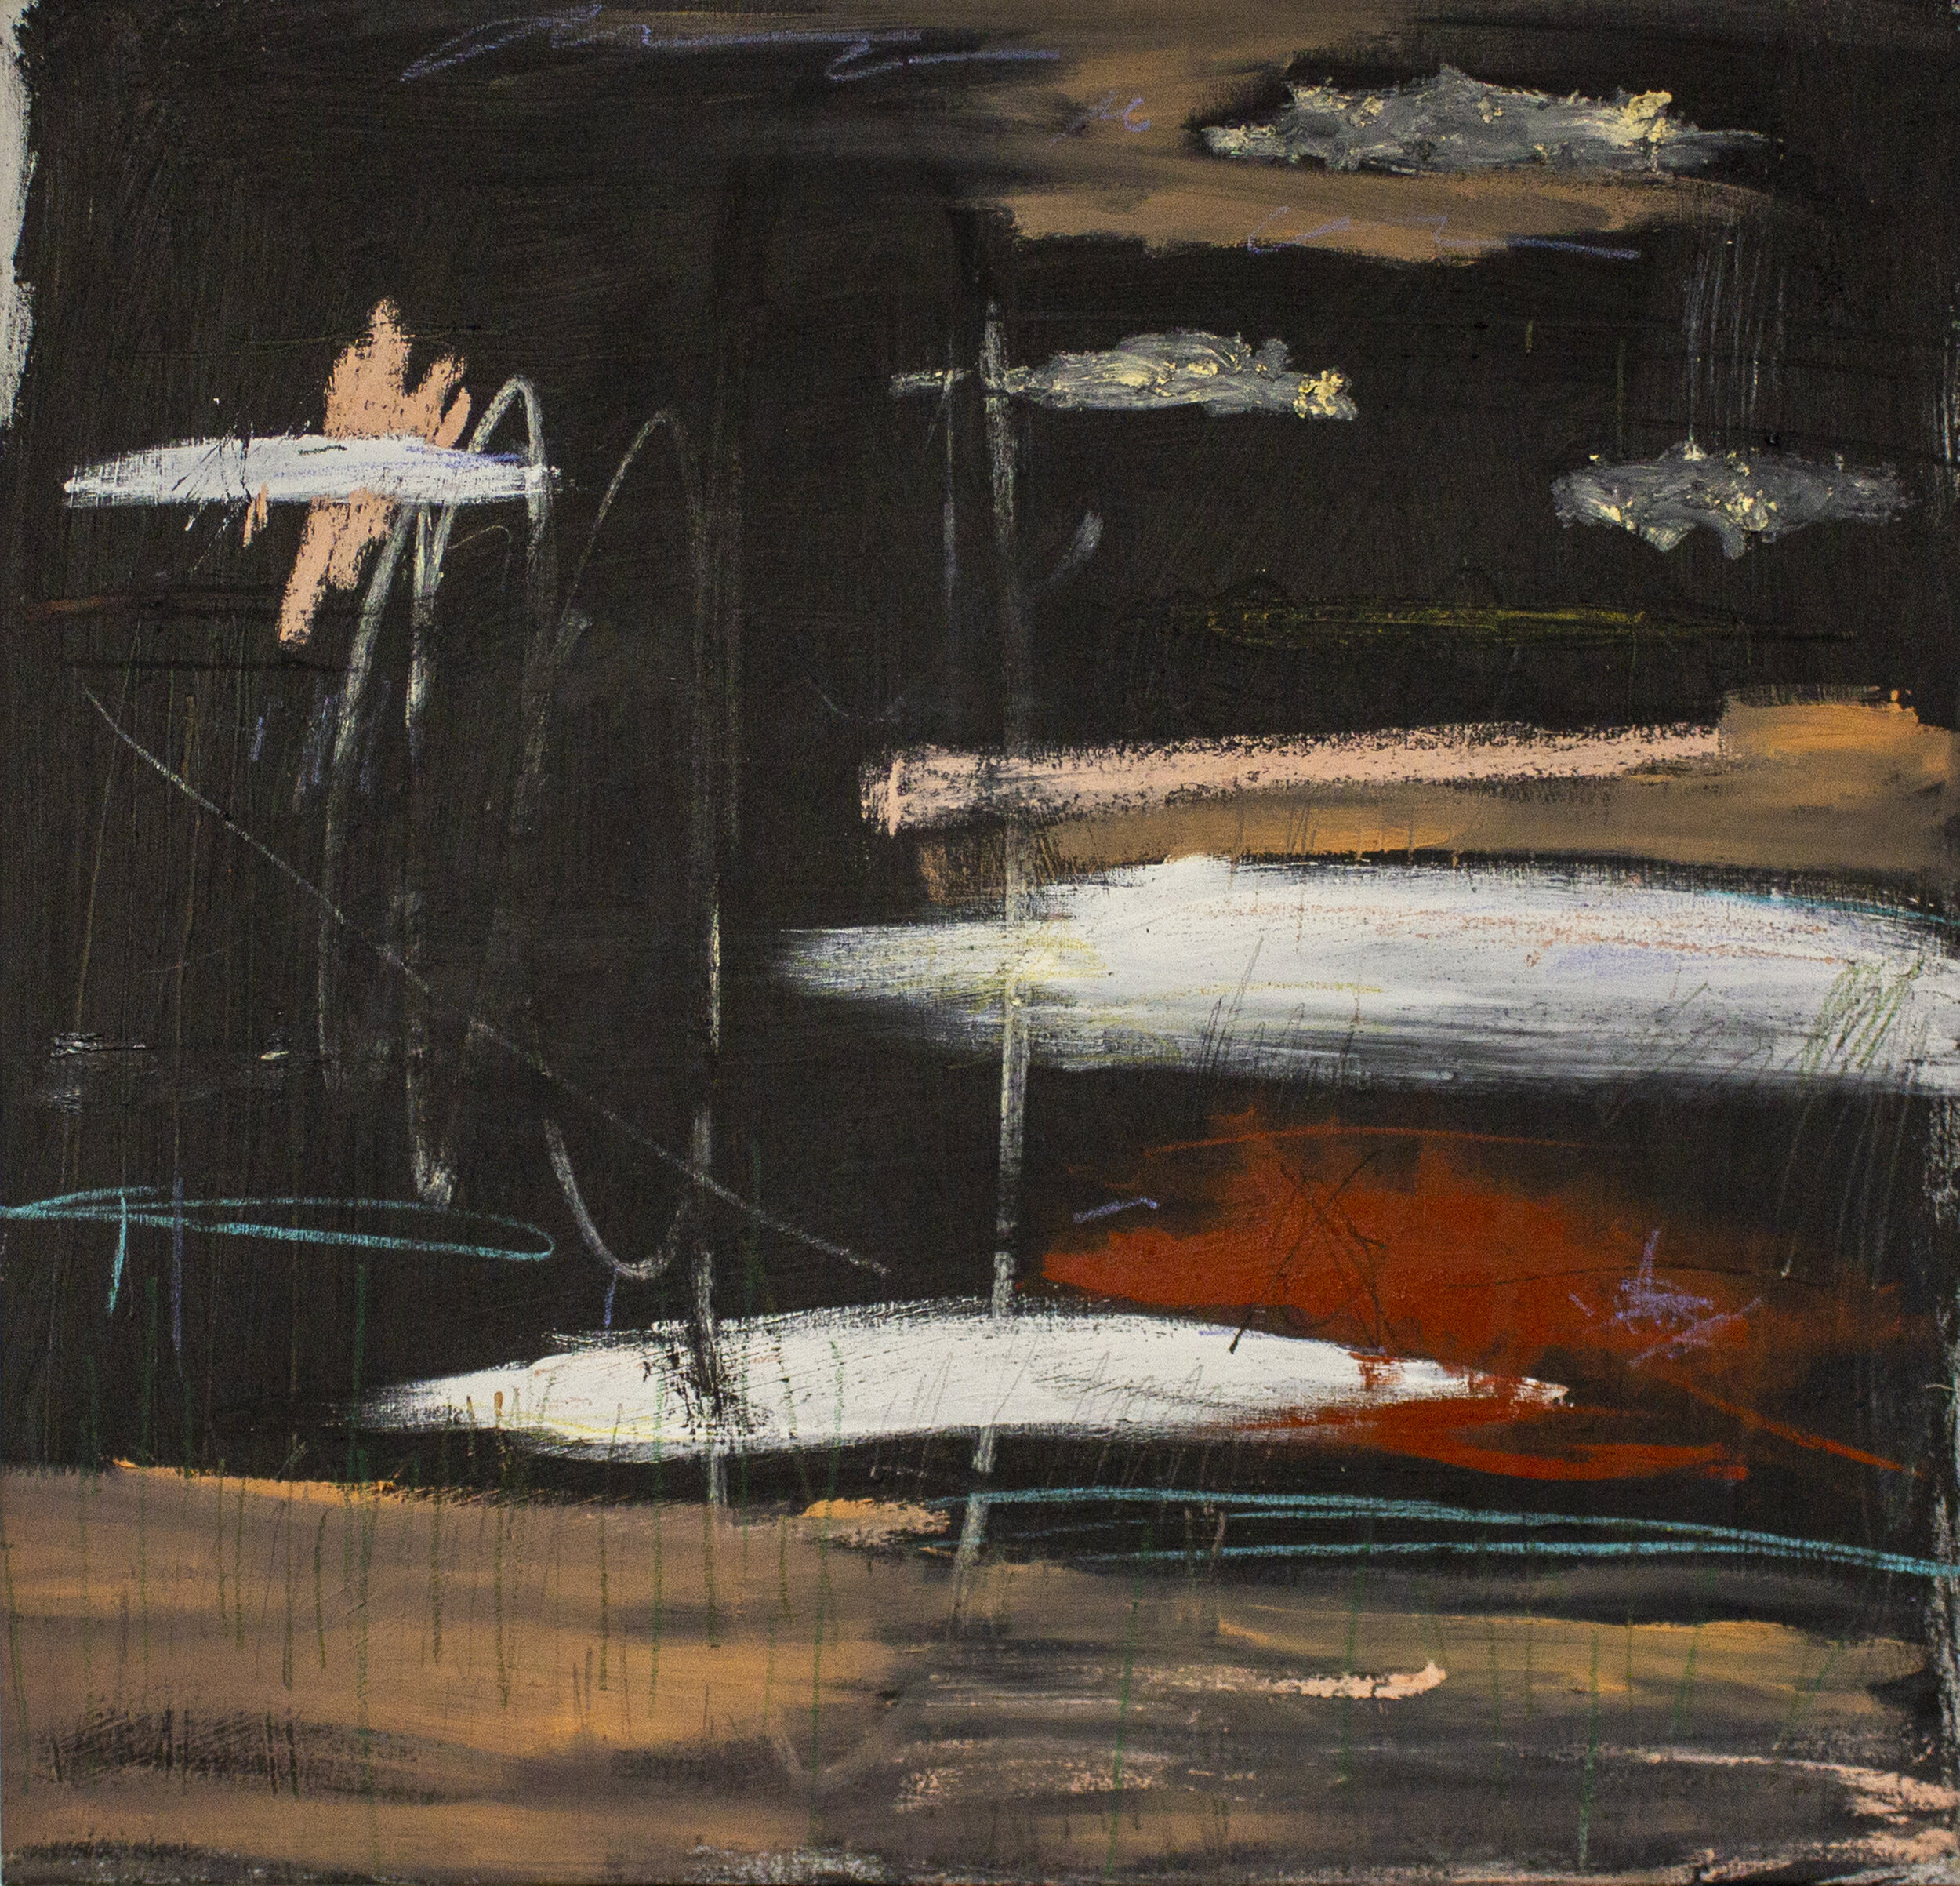   Souffrir; Répéter , 2021  36 x 28 Inches  Oil, Acrylic, Colored Pencil, Oil Stick, Graphite, Chalk Pastel on Canvas  Private Collection 